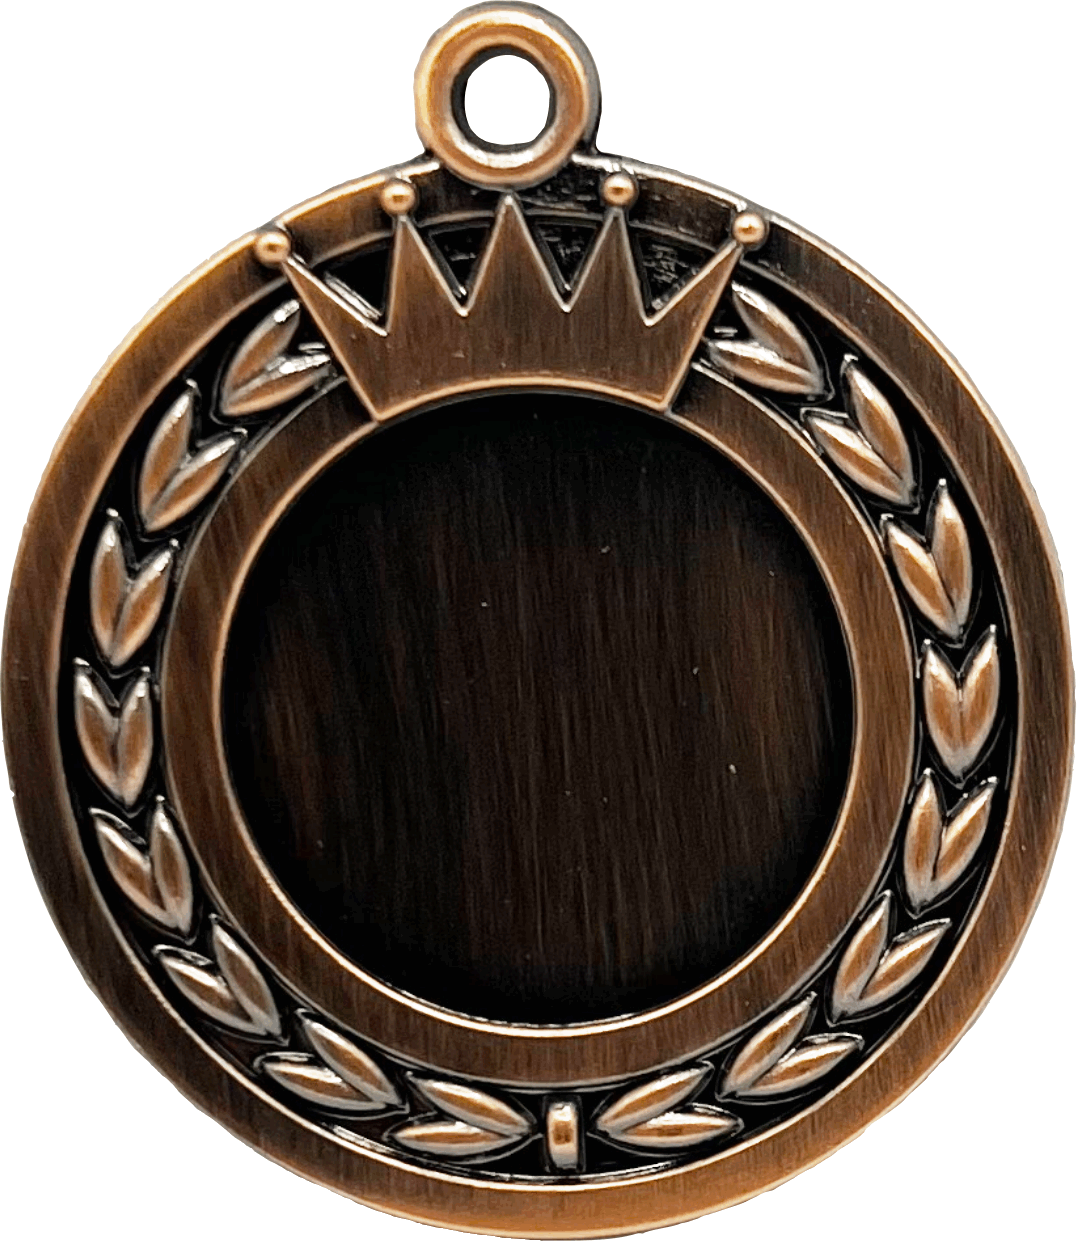 Medaille "Krone" in der Farbe Bronze inkl. Band u. Emblem